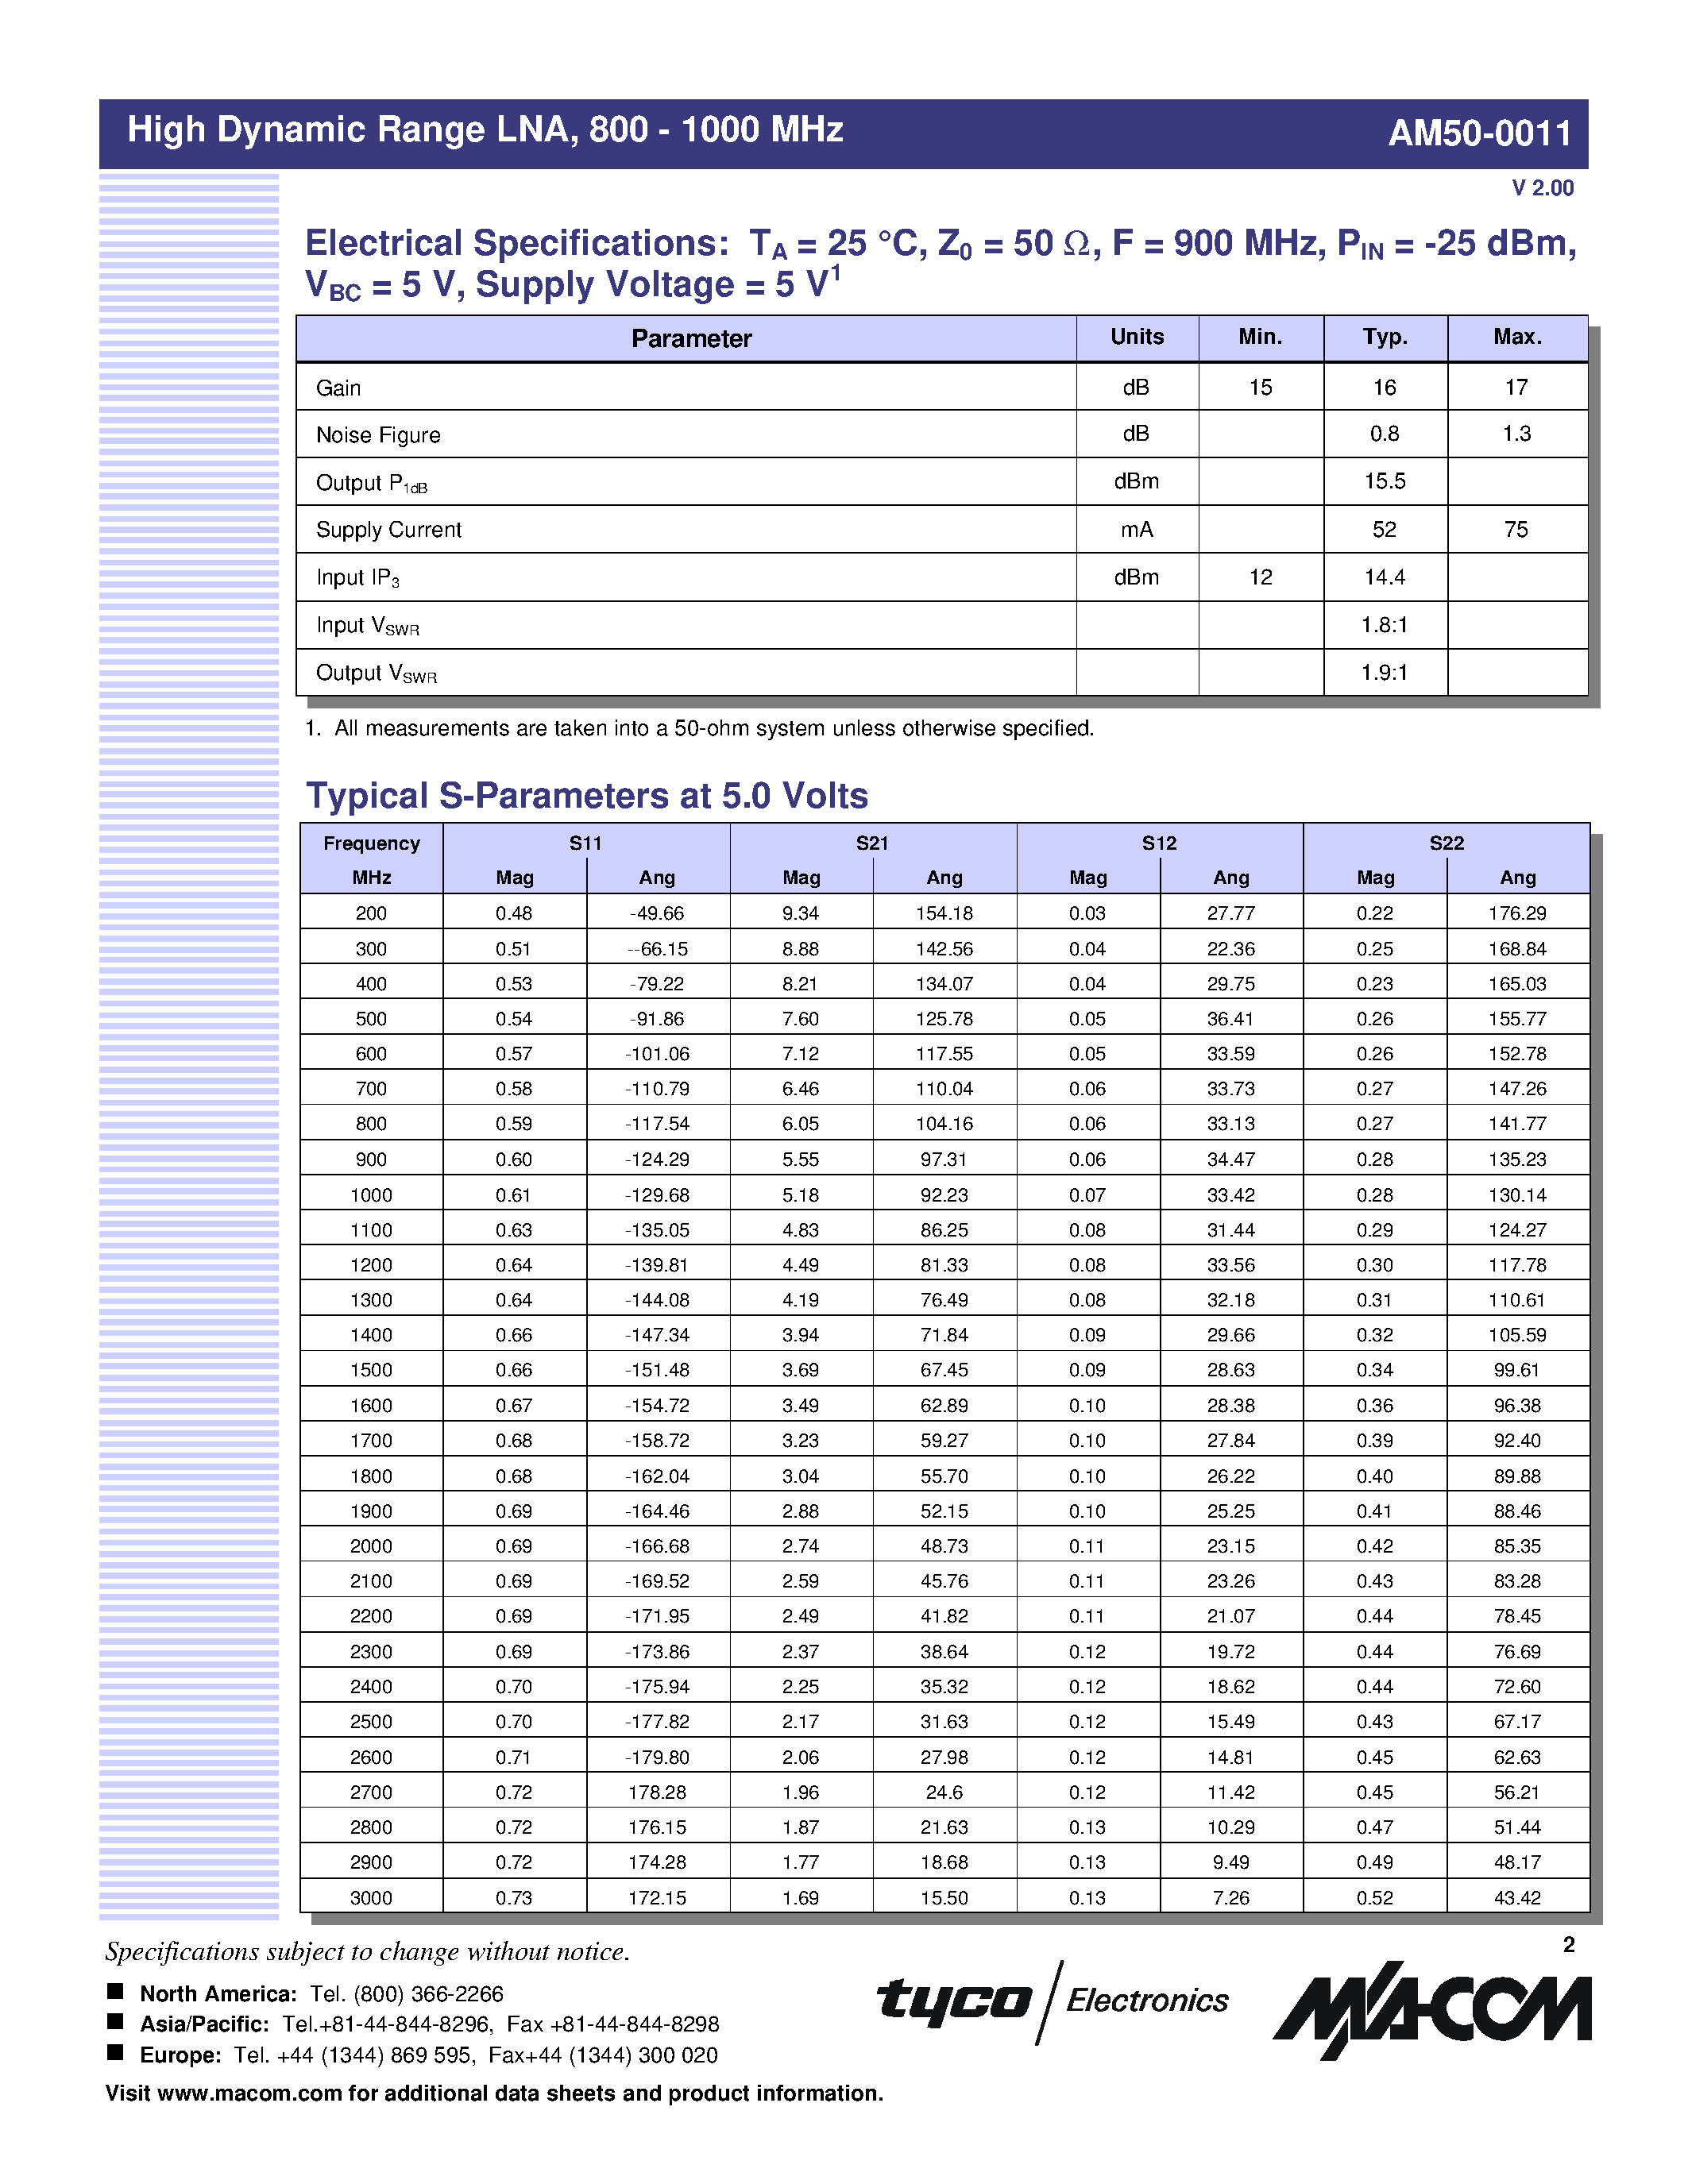 Datasheet AM50-0011TR - High Dynamic Range LNA 800 - 1000 MHz page 2